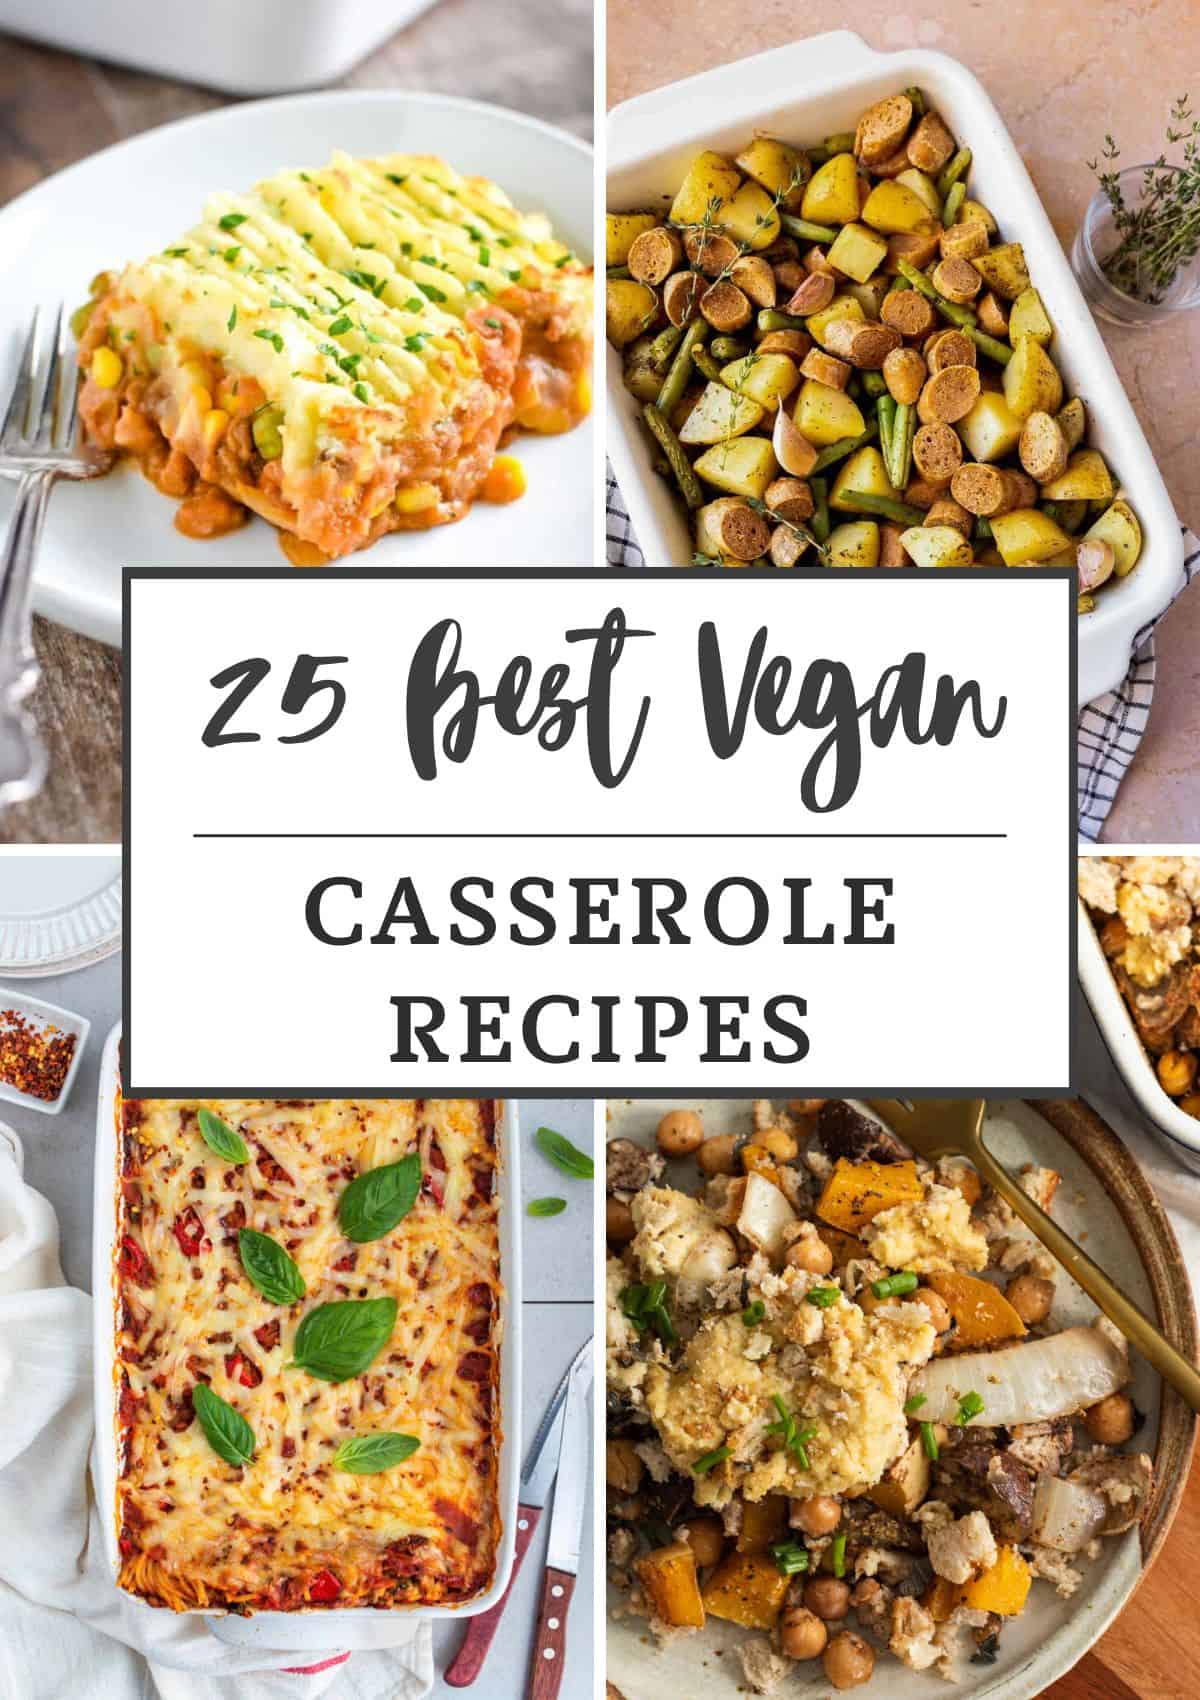 A collage of photos of vegan casserole recipes with text overlay "25 vest vegan casserole recipes".